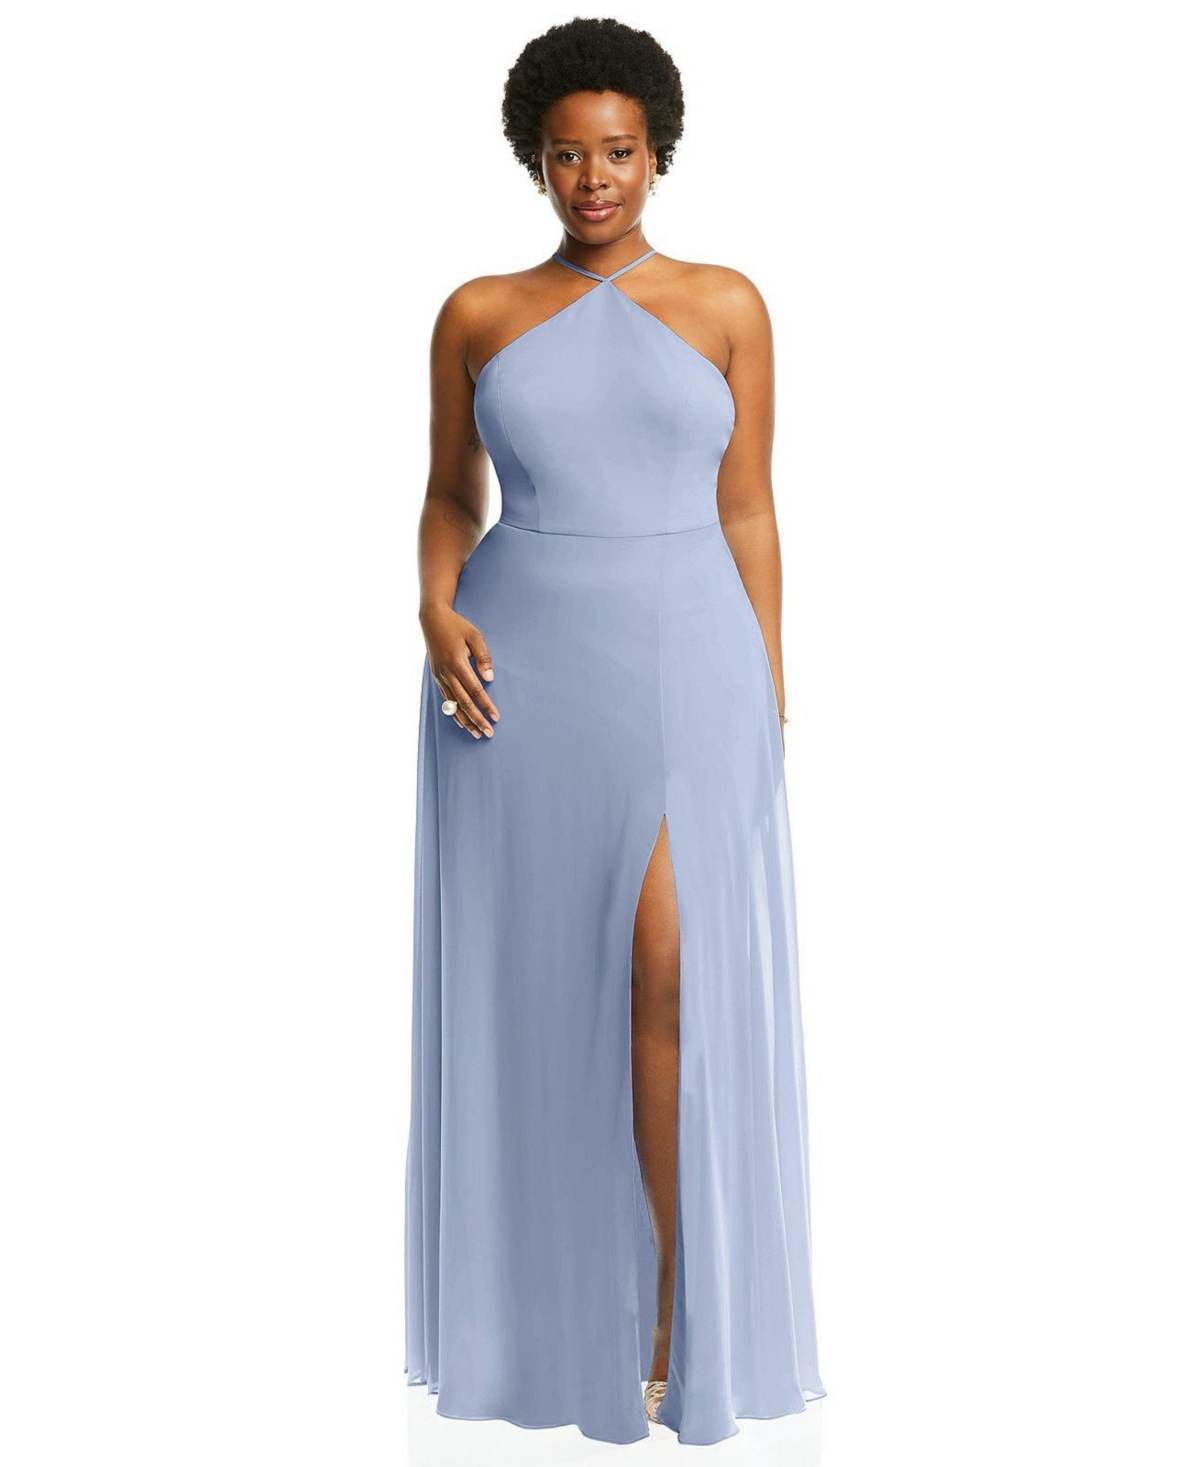 Women's Plus Size Diamond Halter Maxi Dress with Adjustable Straps - Sky blue